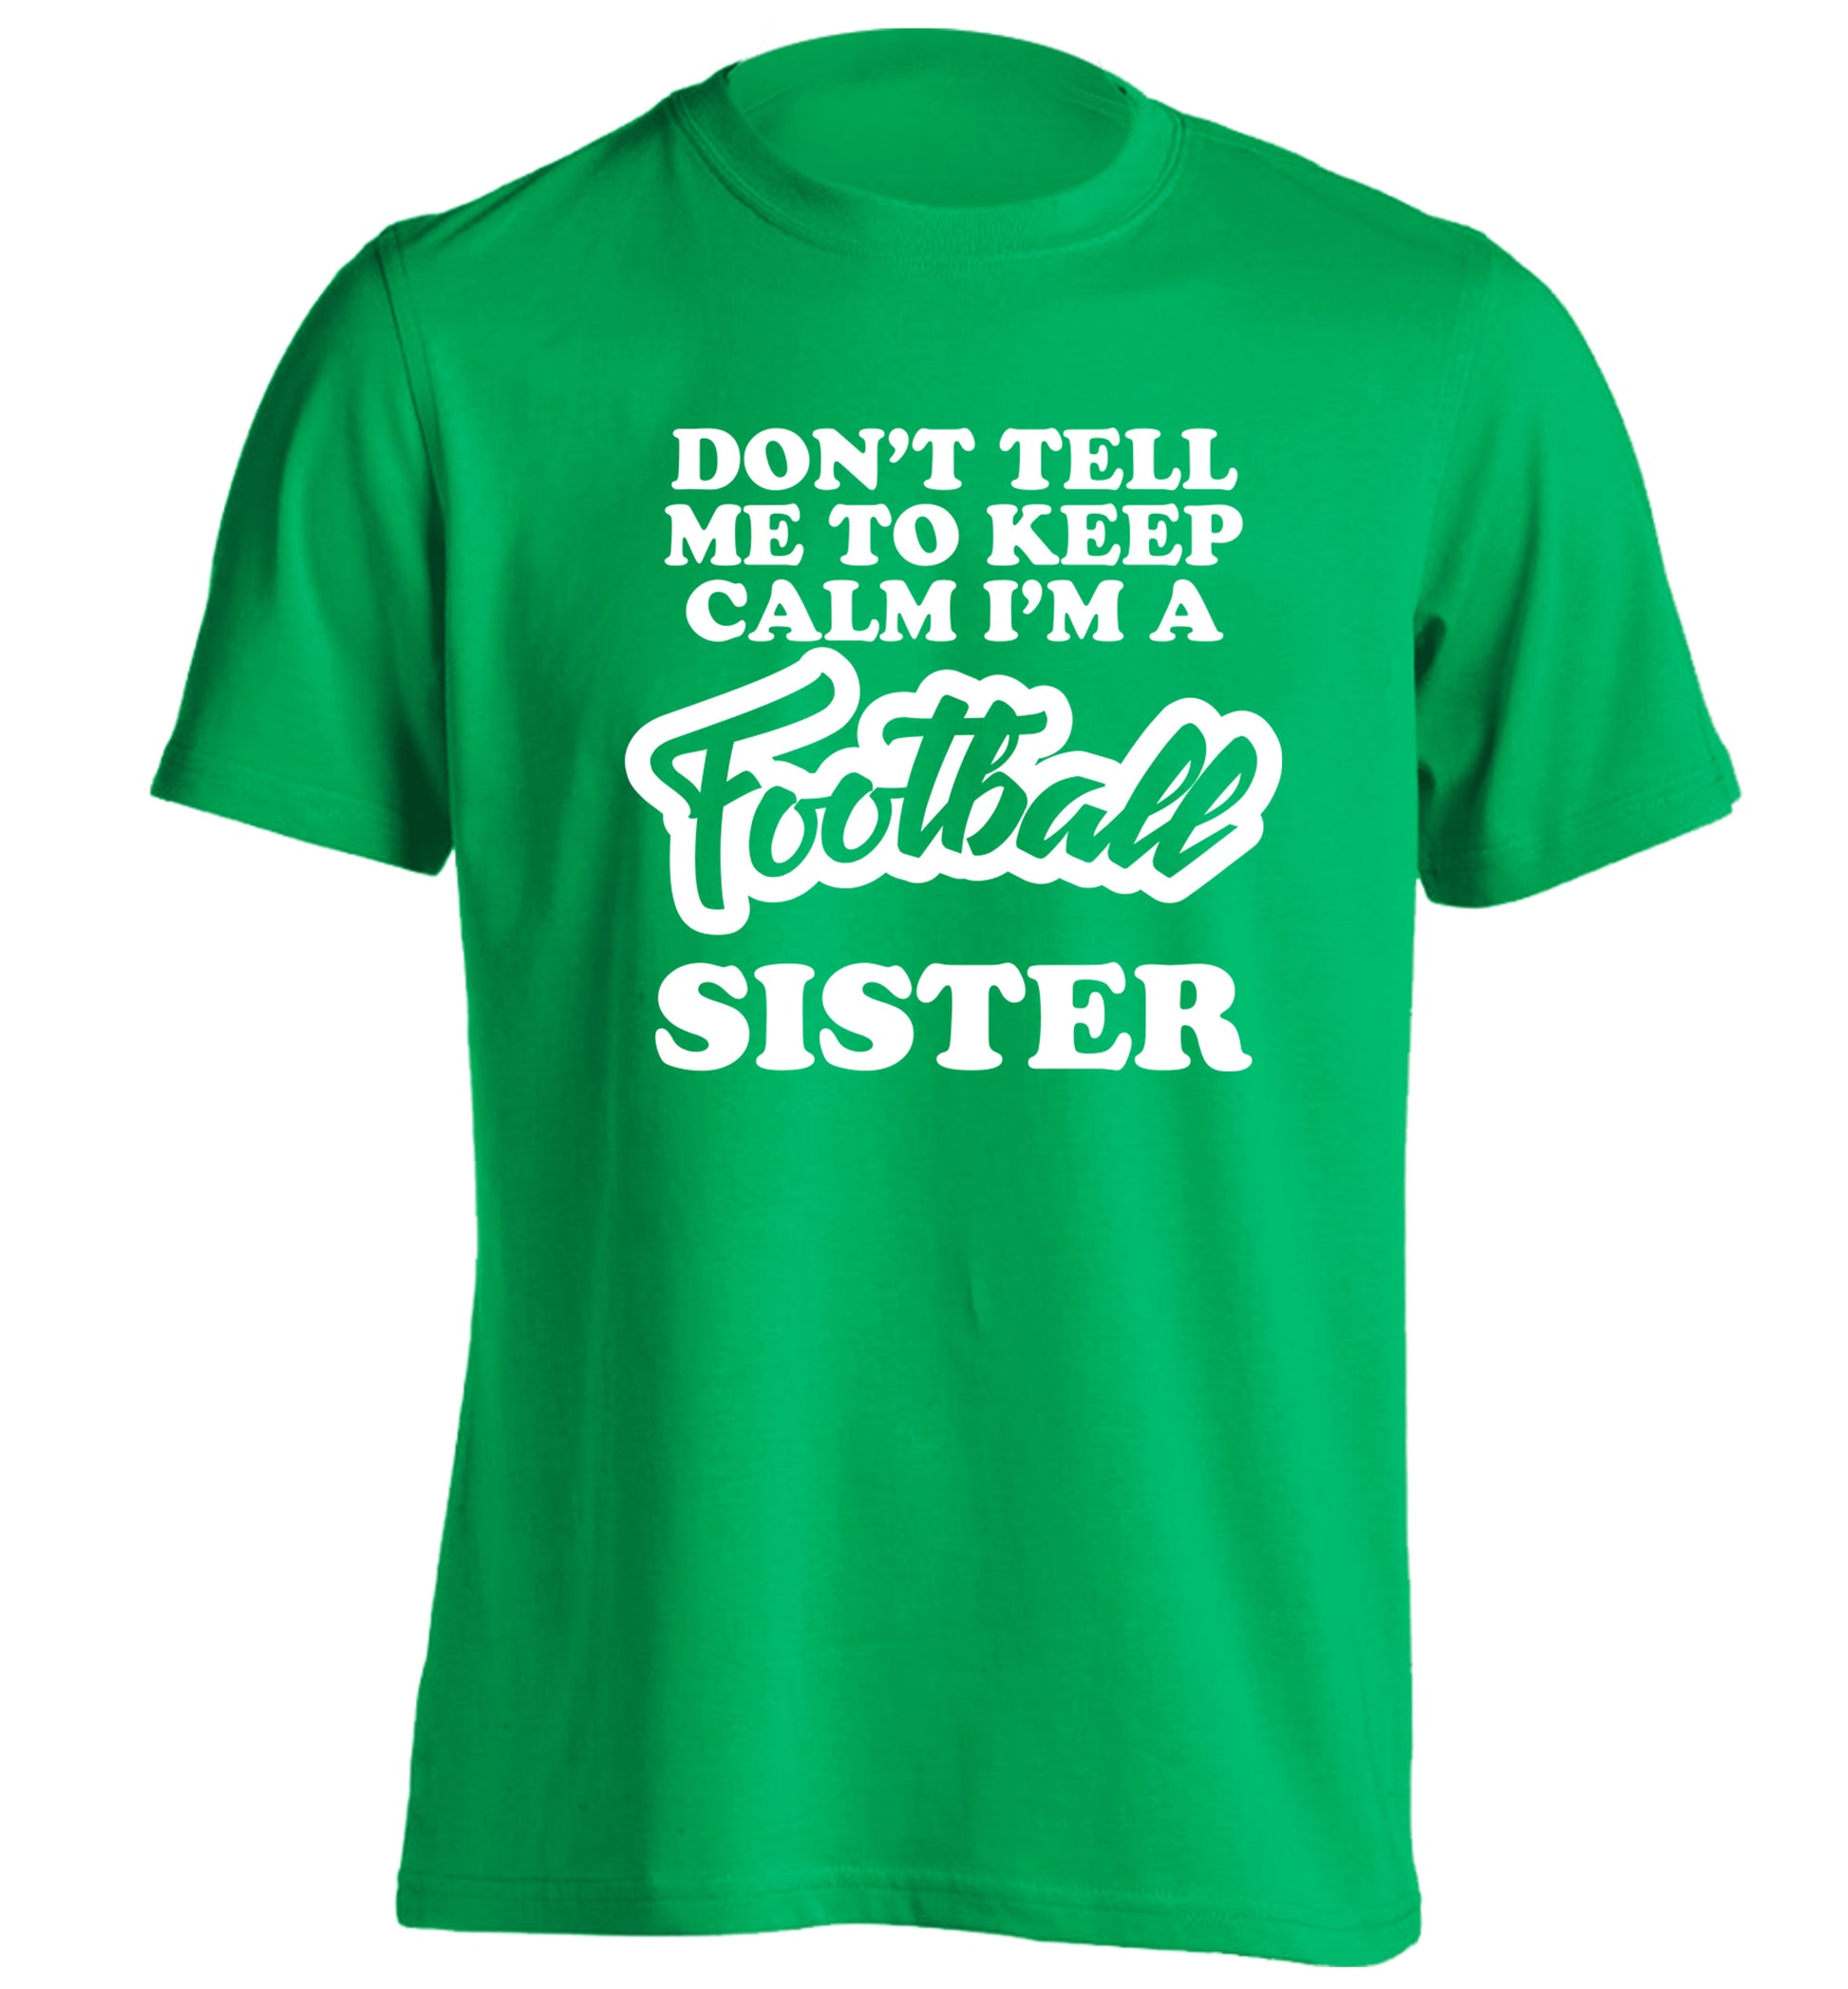 Don't tell me to keep calm I'm a football sister adults unisexgreen Tshirt 2XL